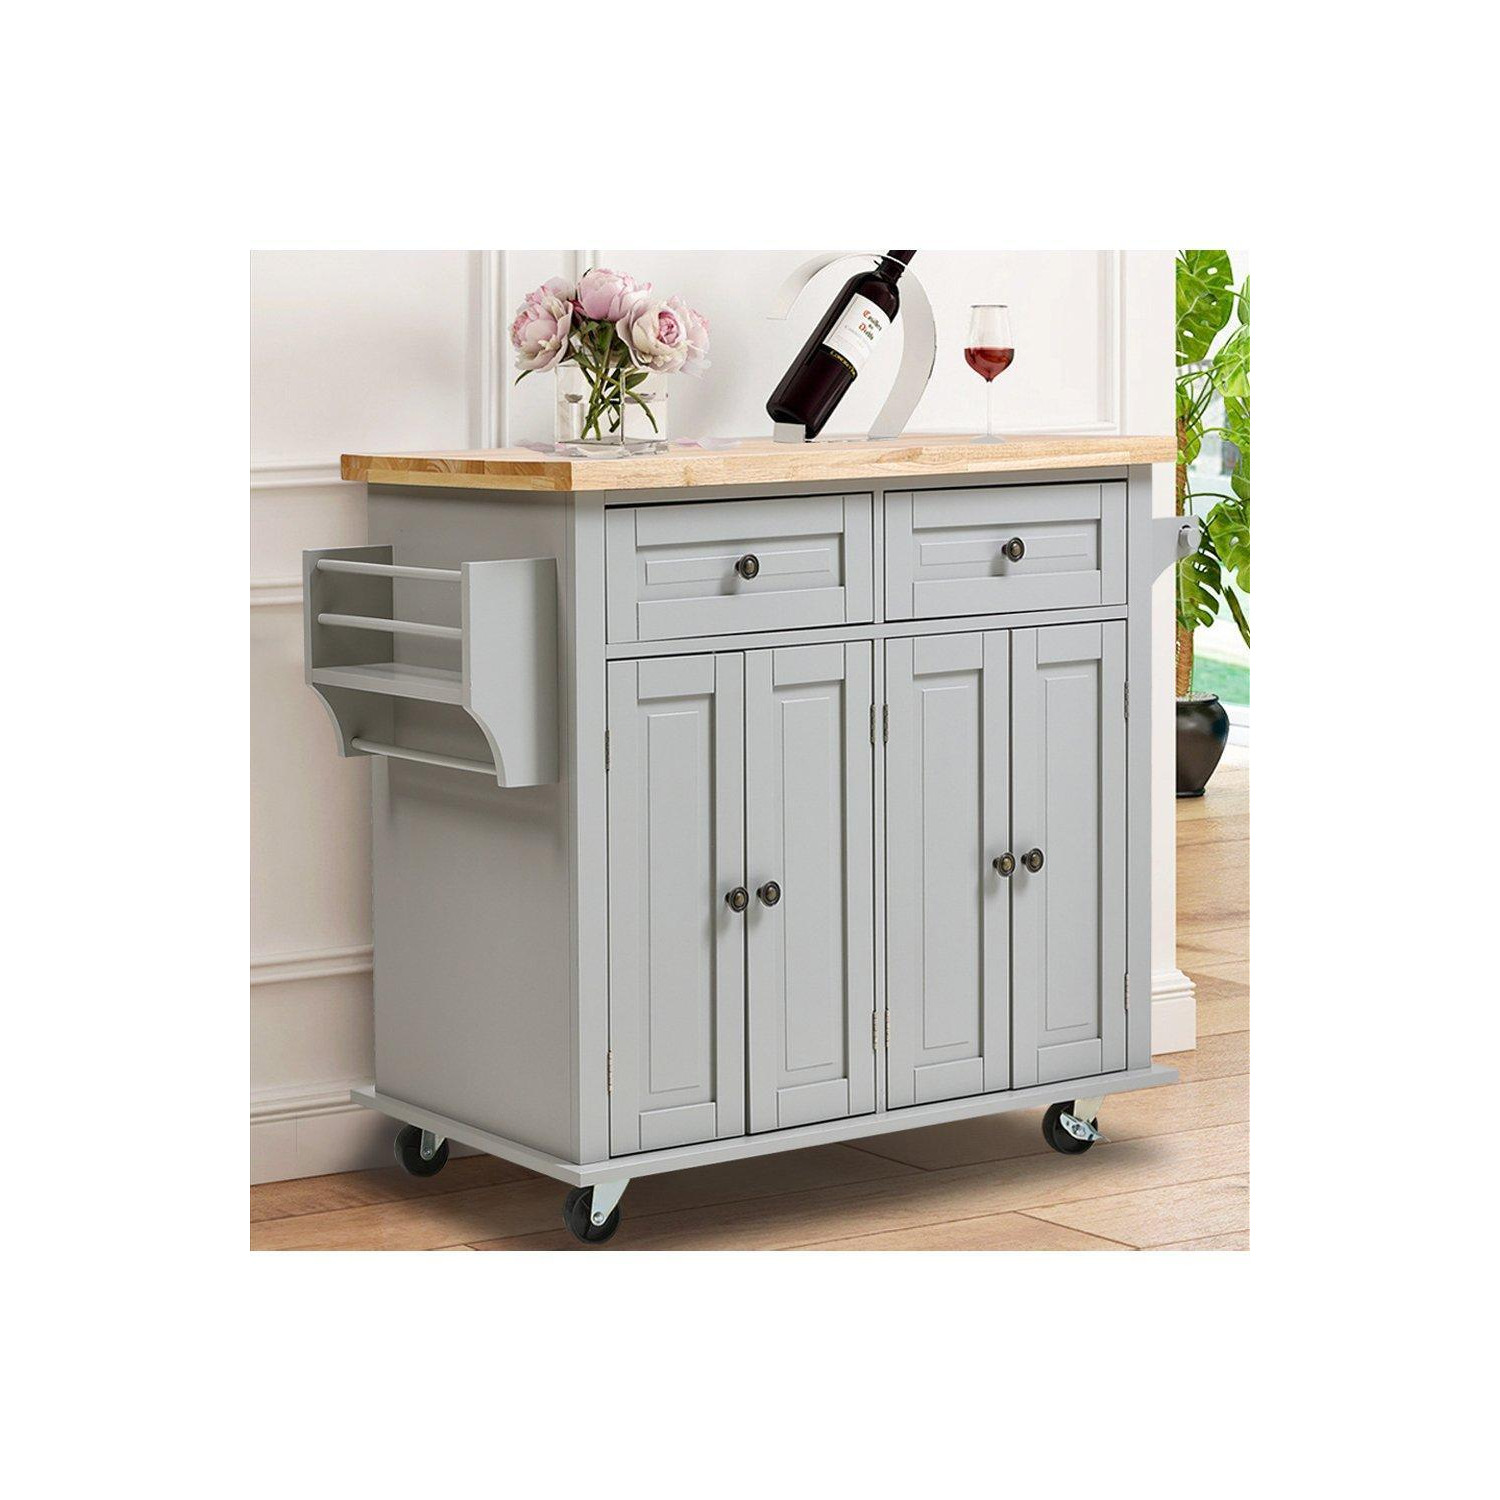 Modern Rolling Wooden Kitchen Island Cart with Storage Cabinet - image 1